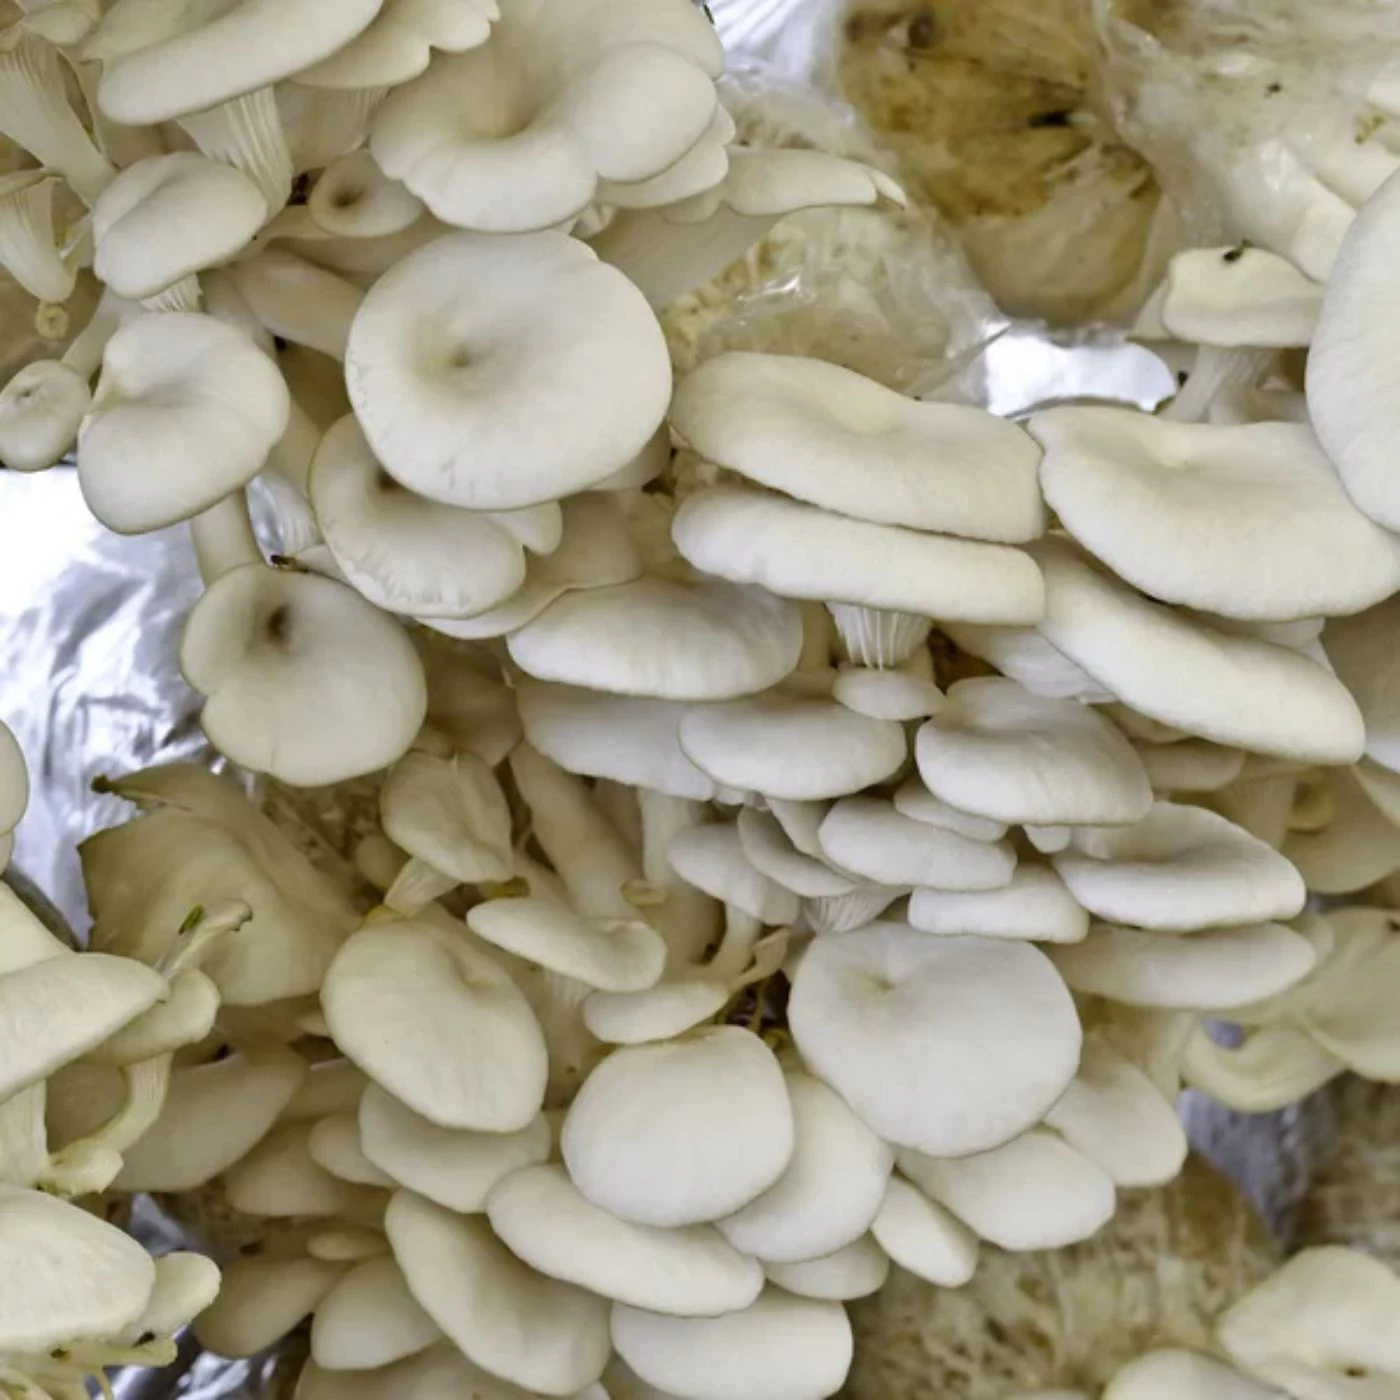 https://bootstrapbee.com/media/pages/mushrooms/is-mushroom-farming-profitable-4-calculations/2369f59081-1680164453/oyster-mushroom-in-thailand-farm-1.webp